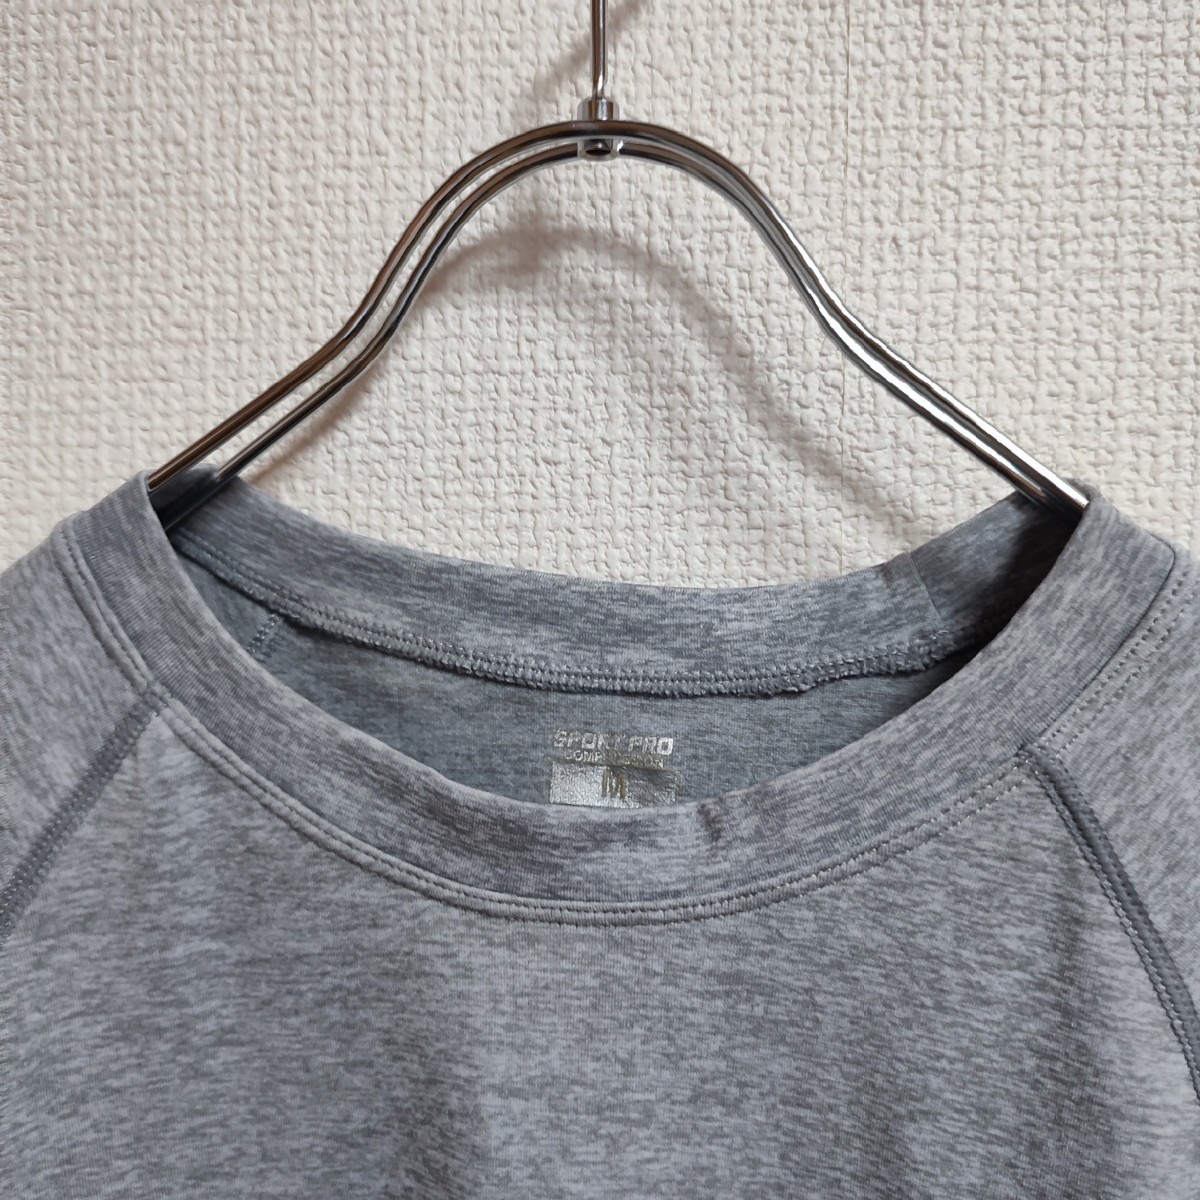 SPORT PRO short sleeves T-shirt gray M size 